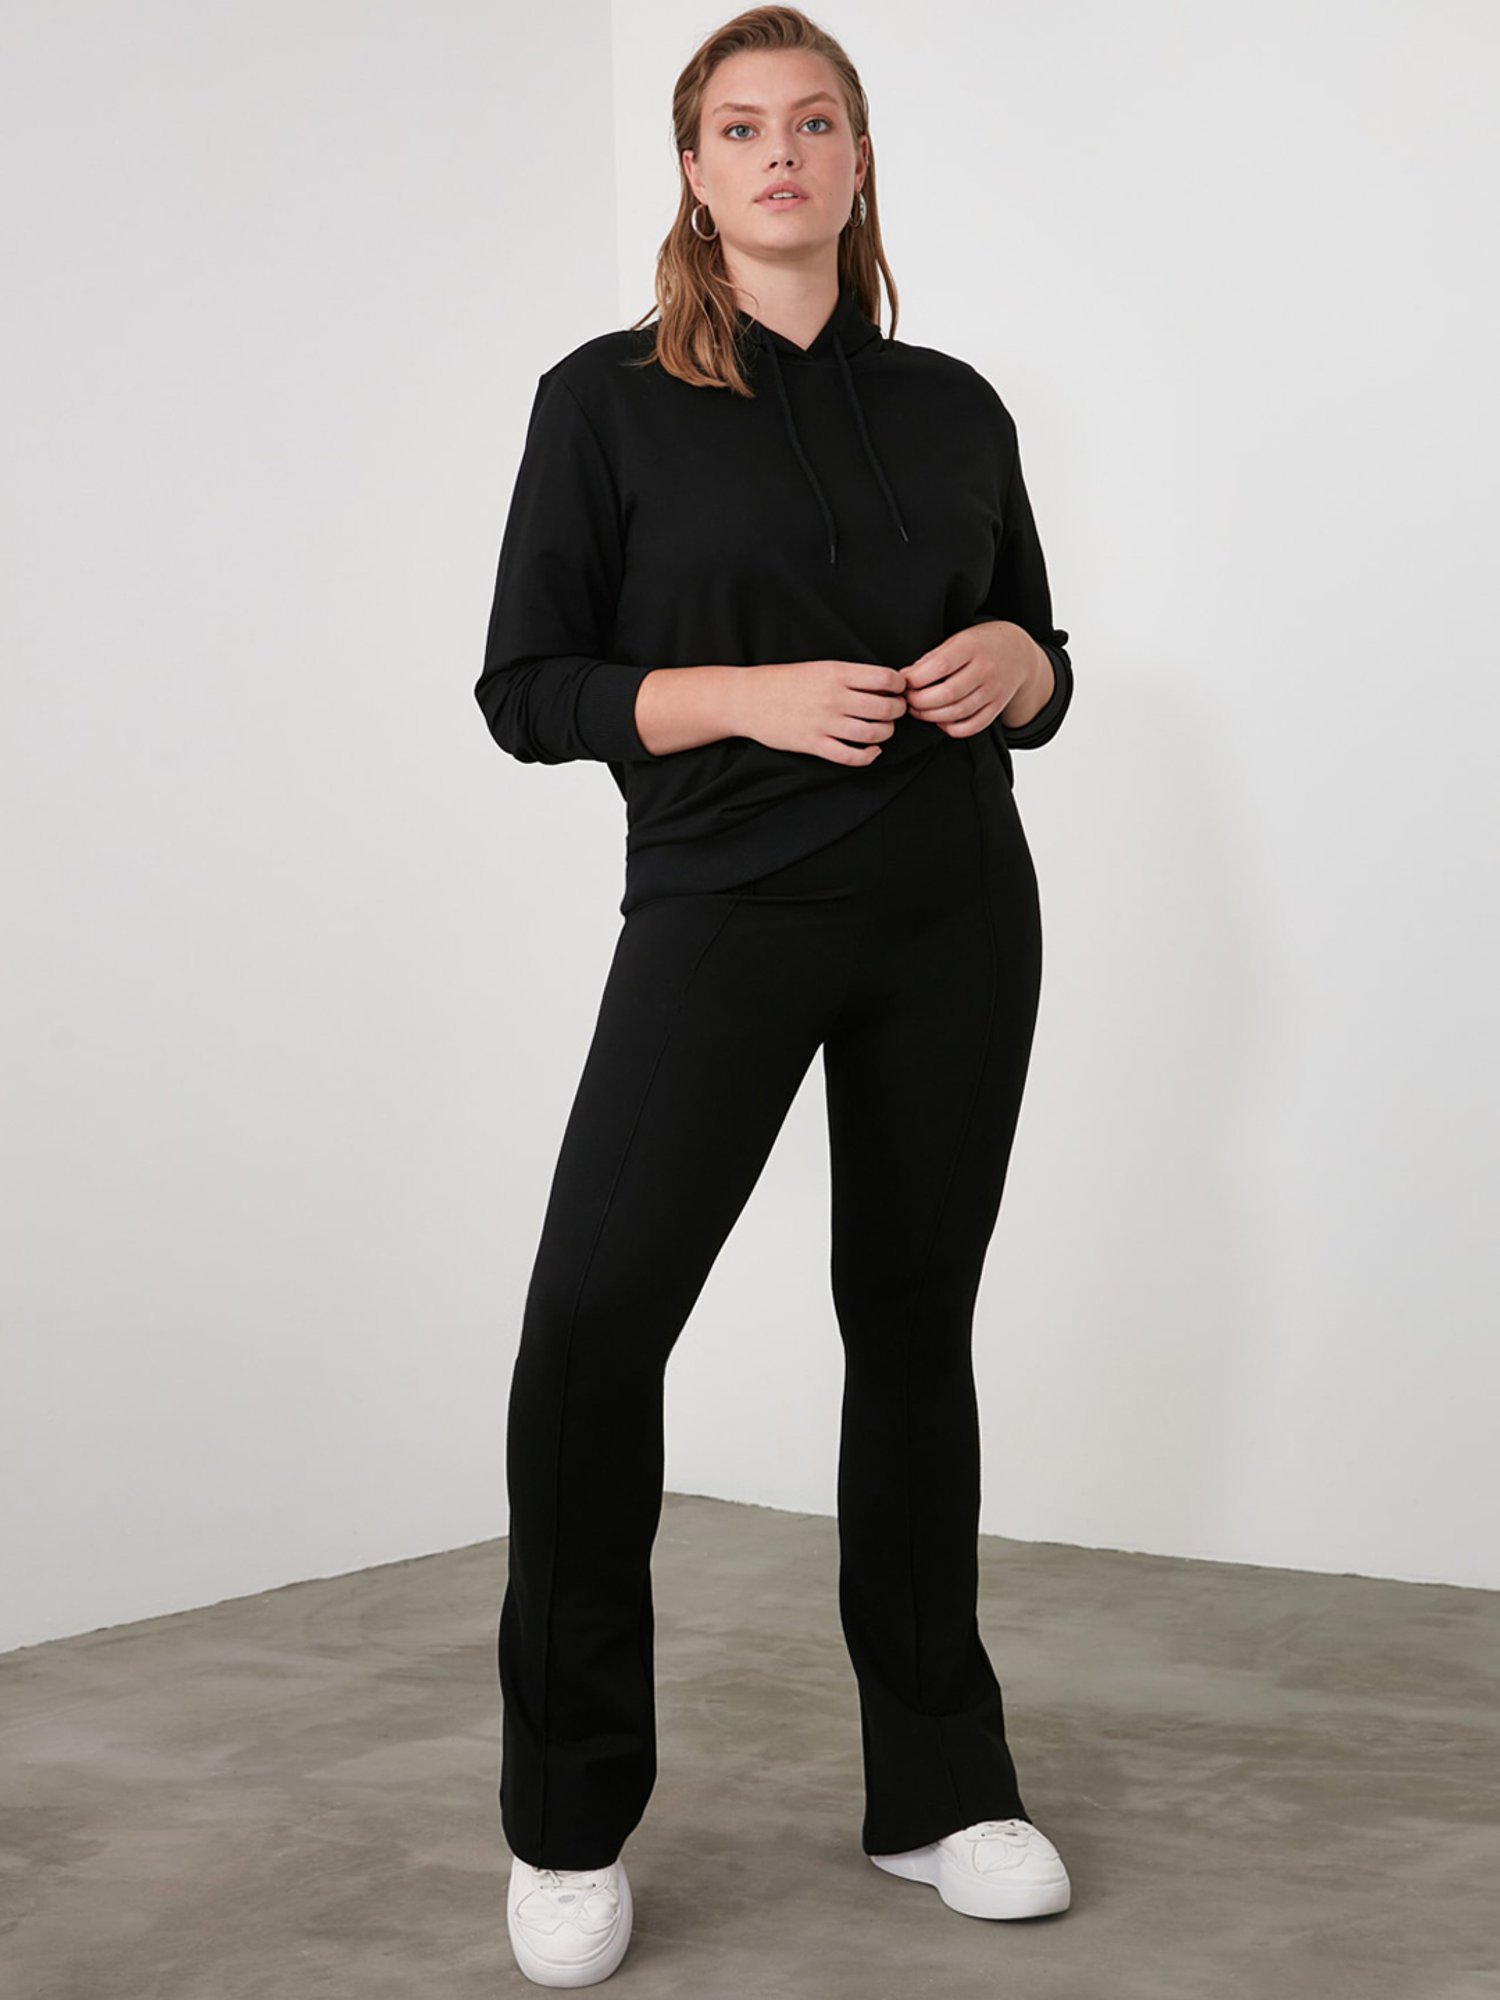 Buy Women Black Solid Formal Regular Fit Trousers Online  764228  Van  Heusen